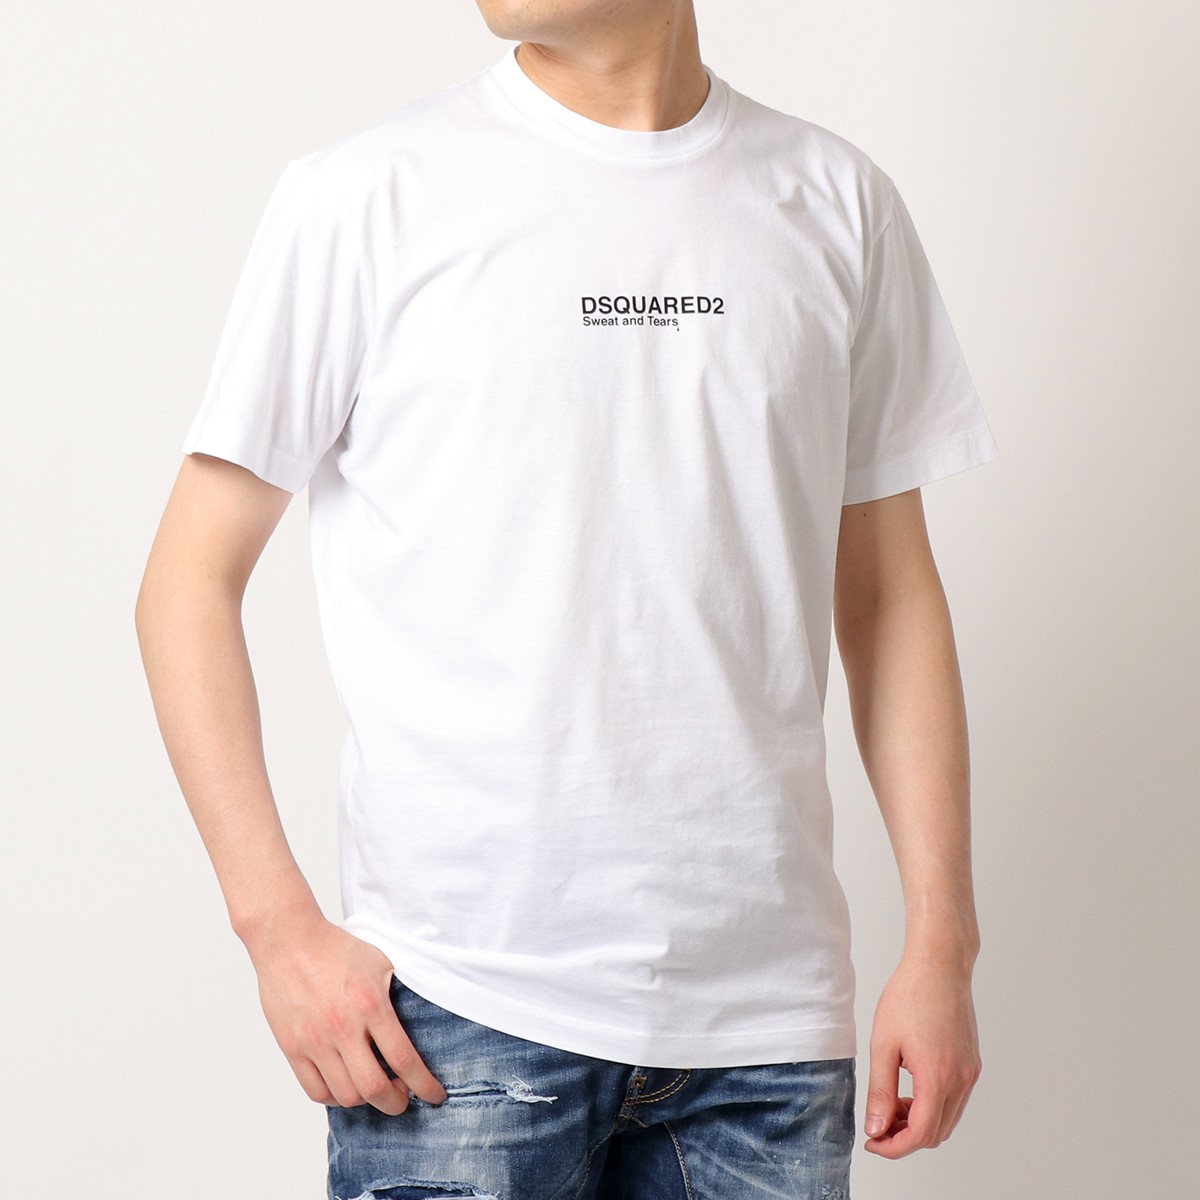 DSQUARED2 ディースクエアード 半袖 Tシャツ Mini Logo Cool T-Shirt S74GD0946 S23009 メンズ  クルーネック カットソー ロゴT コットン カラー2色